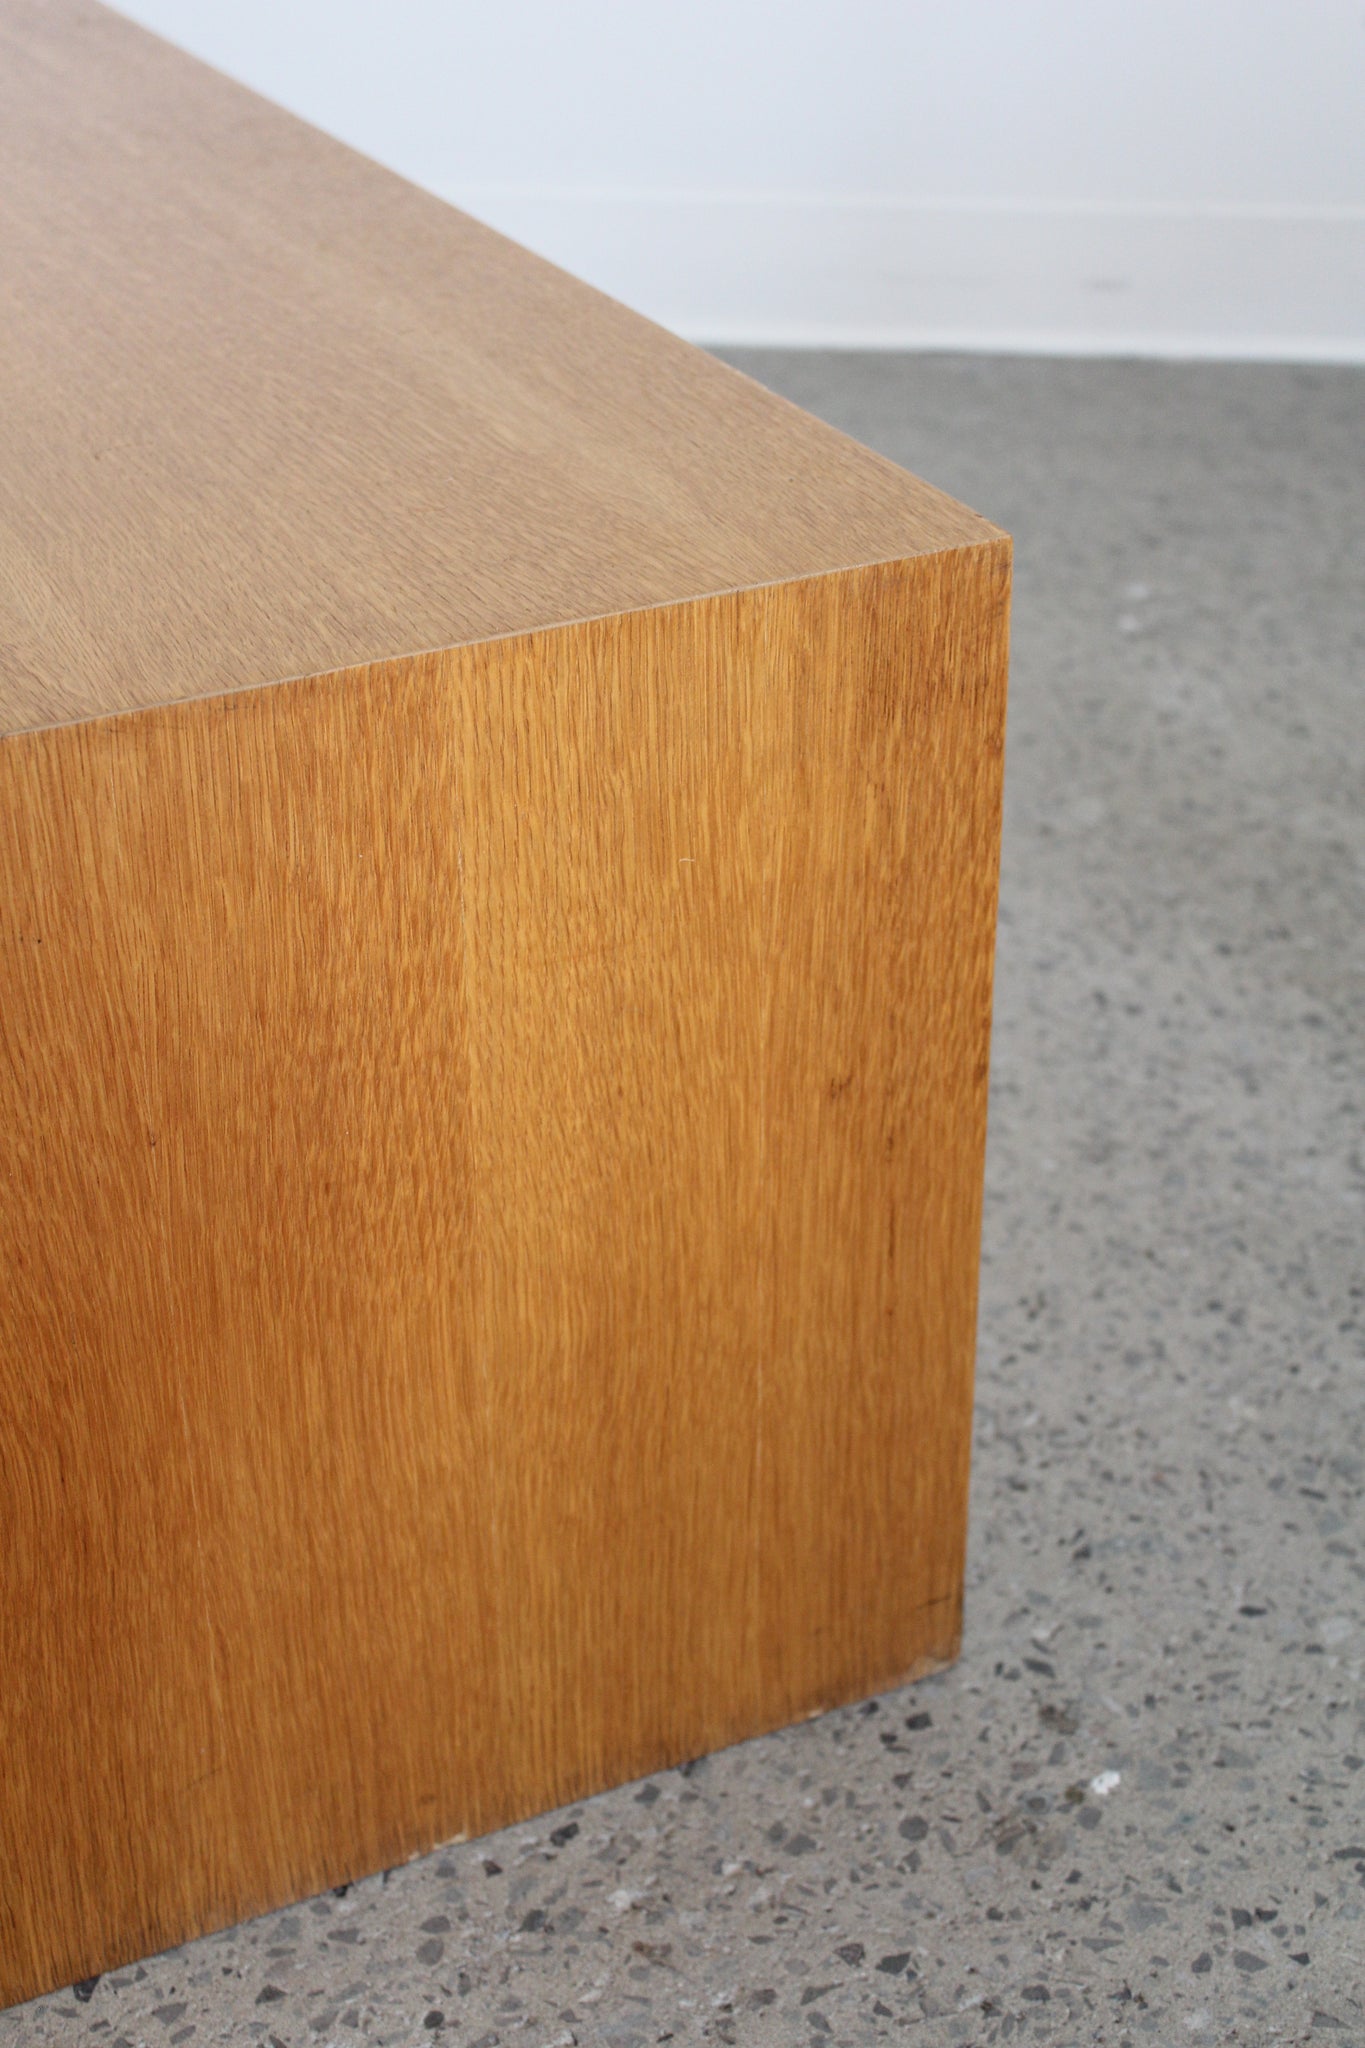 Low wood veneer coffee table by Paul Mayens for Intrex Furniture 